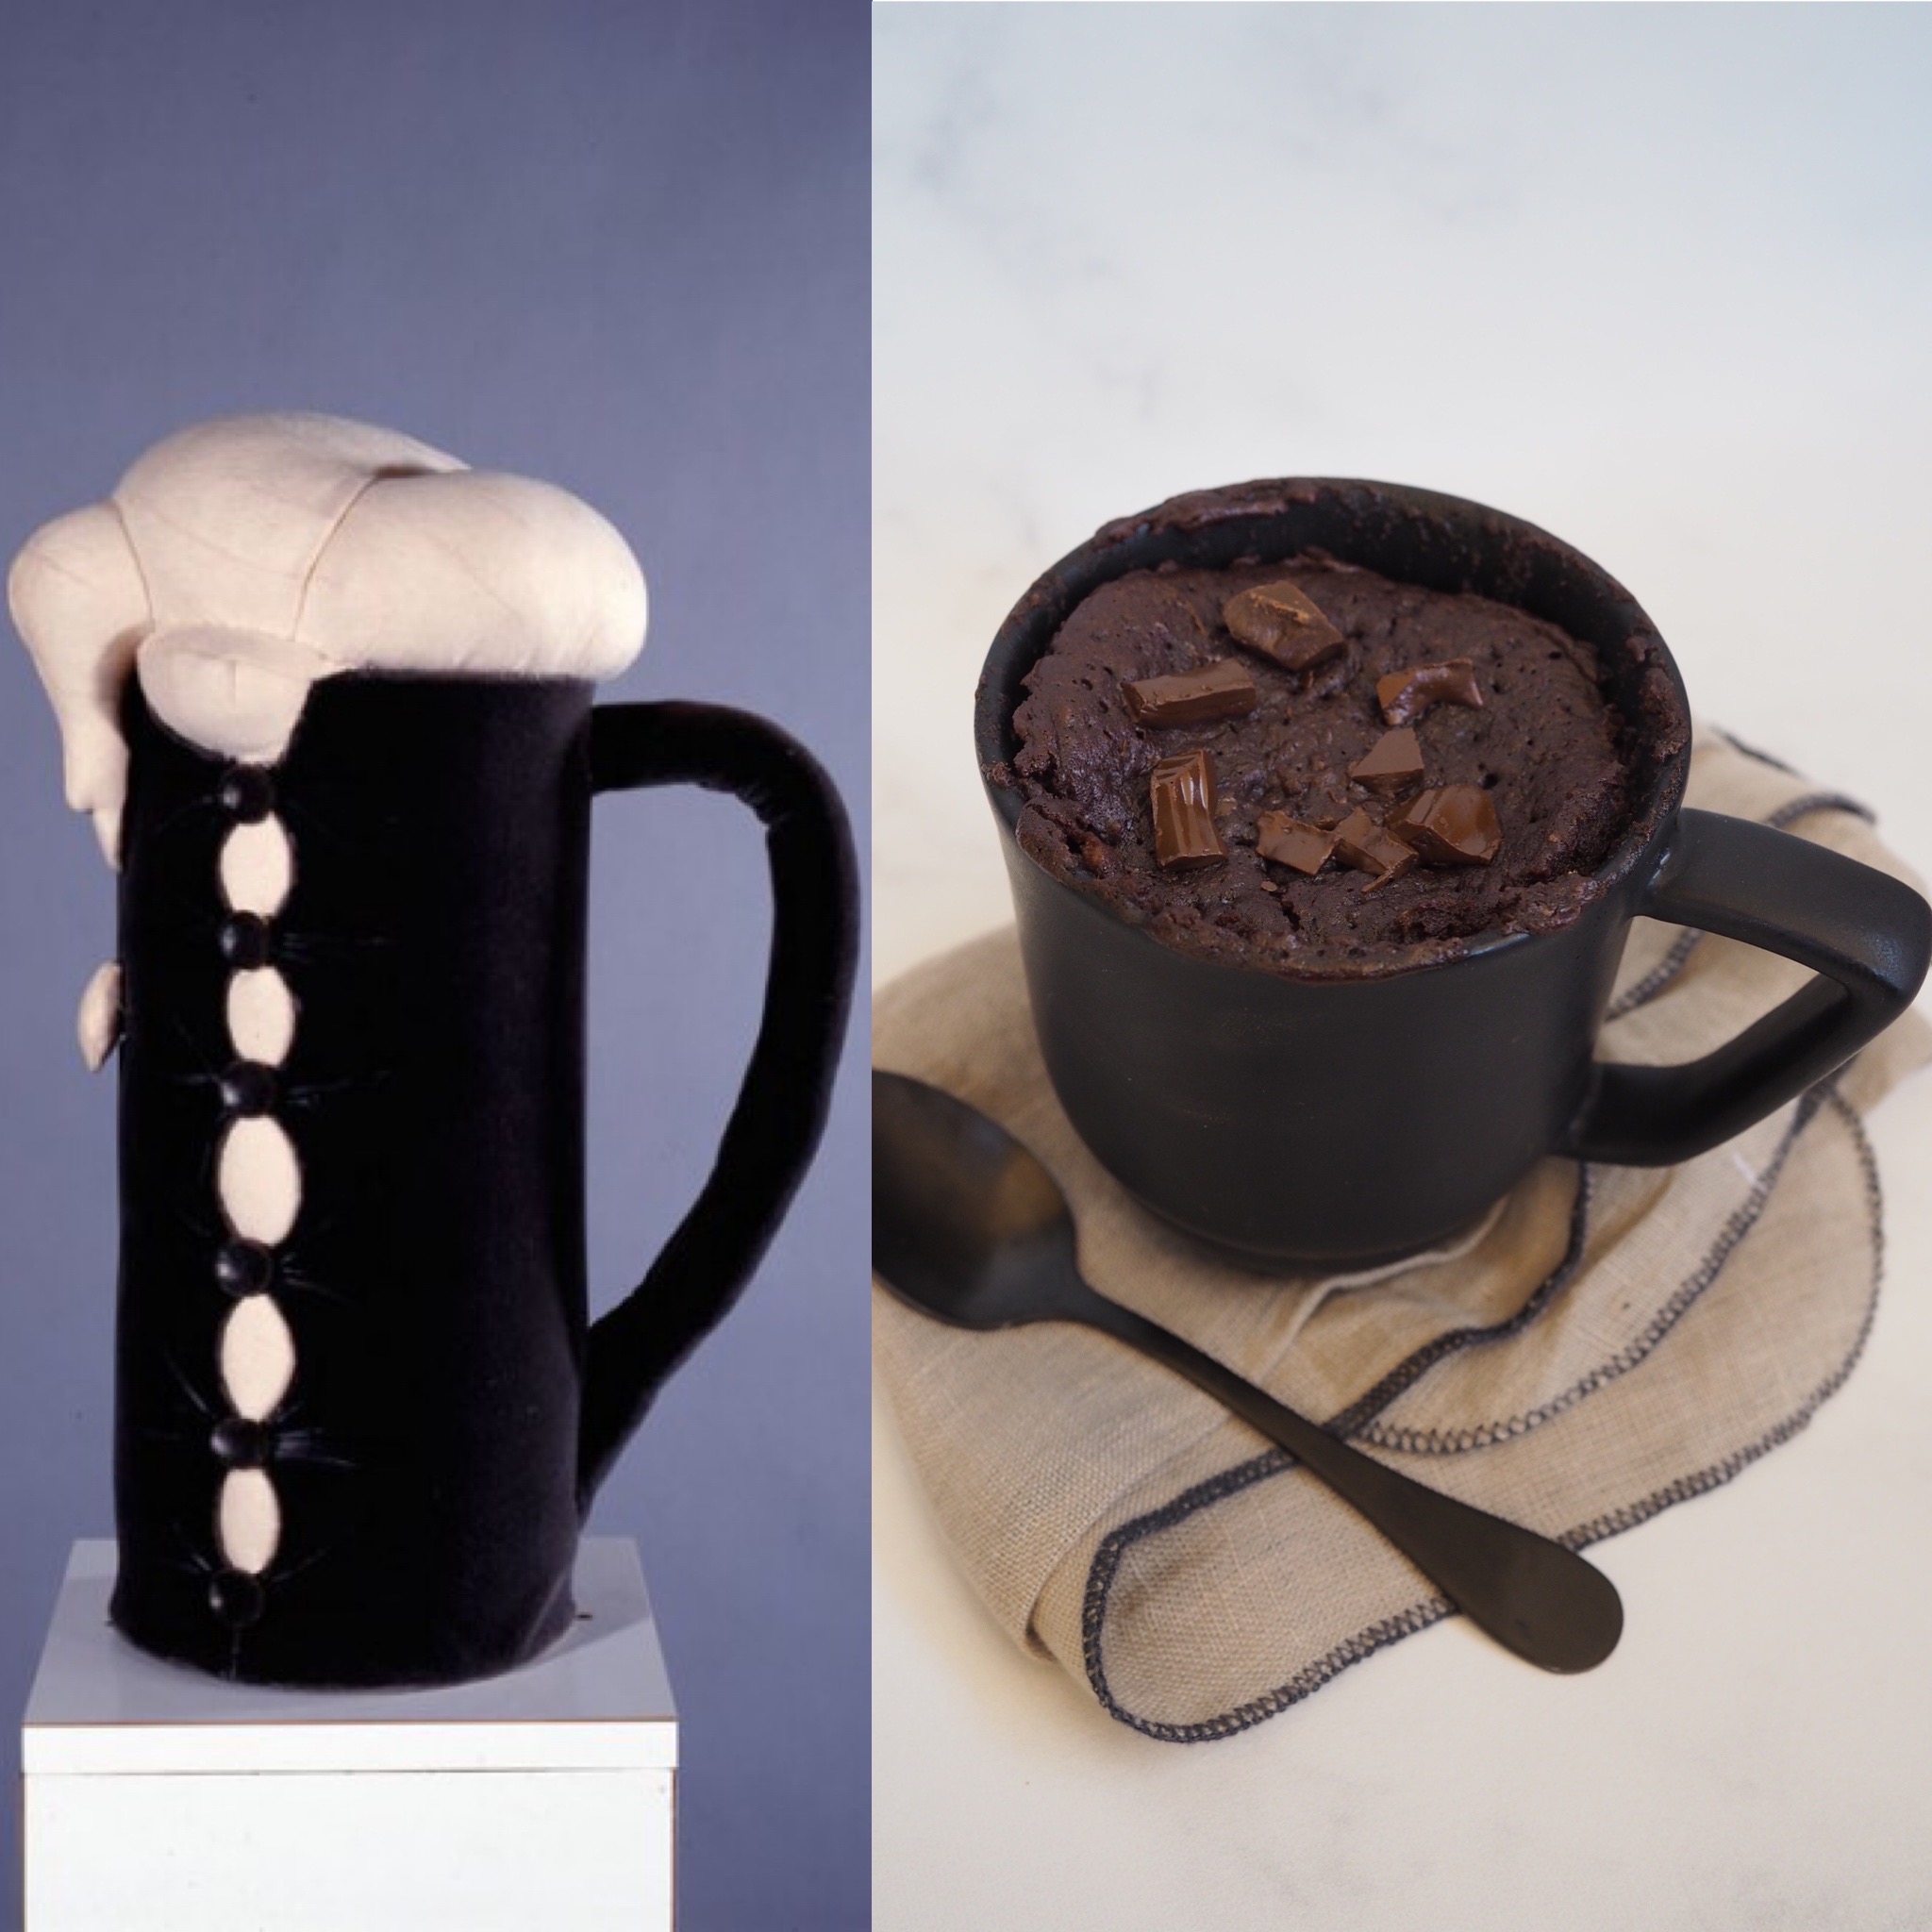 Dorothea Tanning, Don Juan’s Breakfast y el mejor mug cake vegano